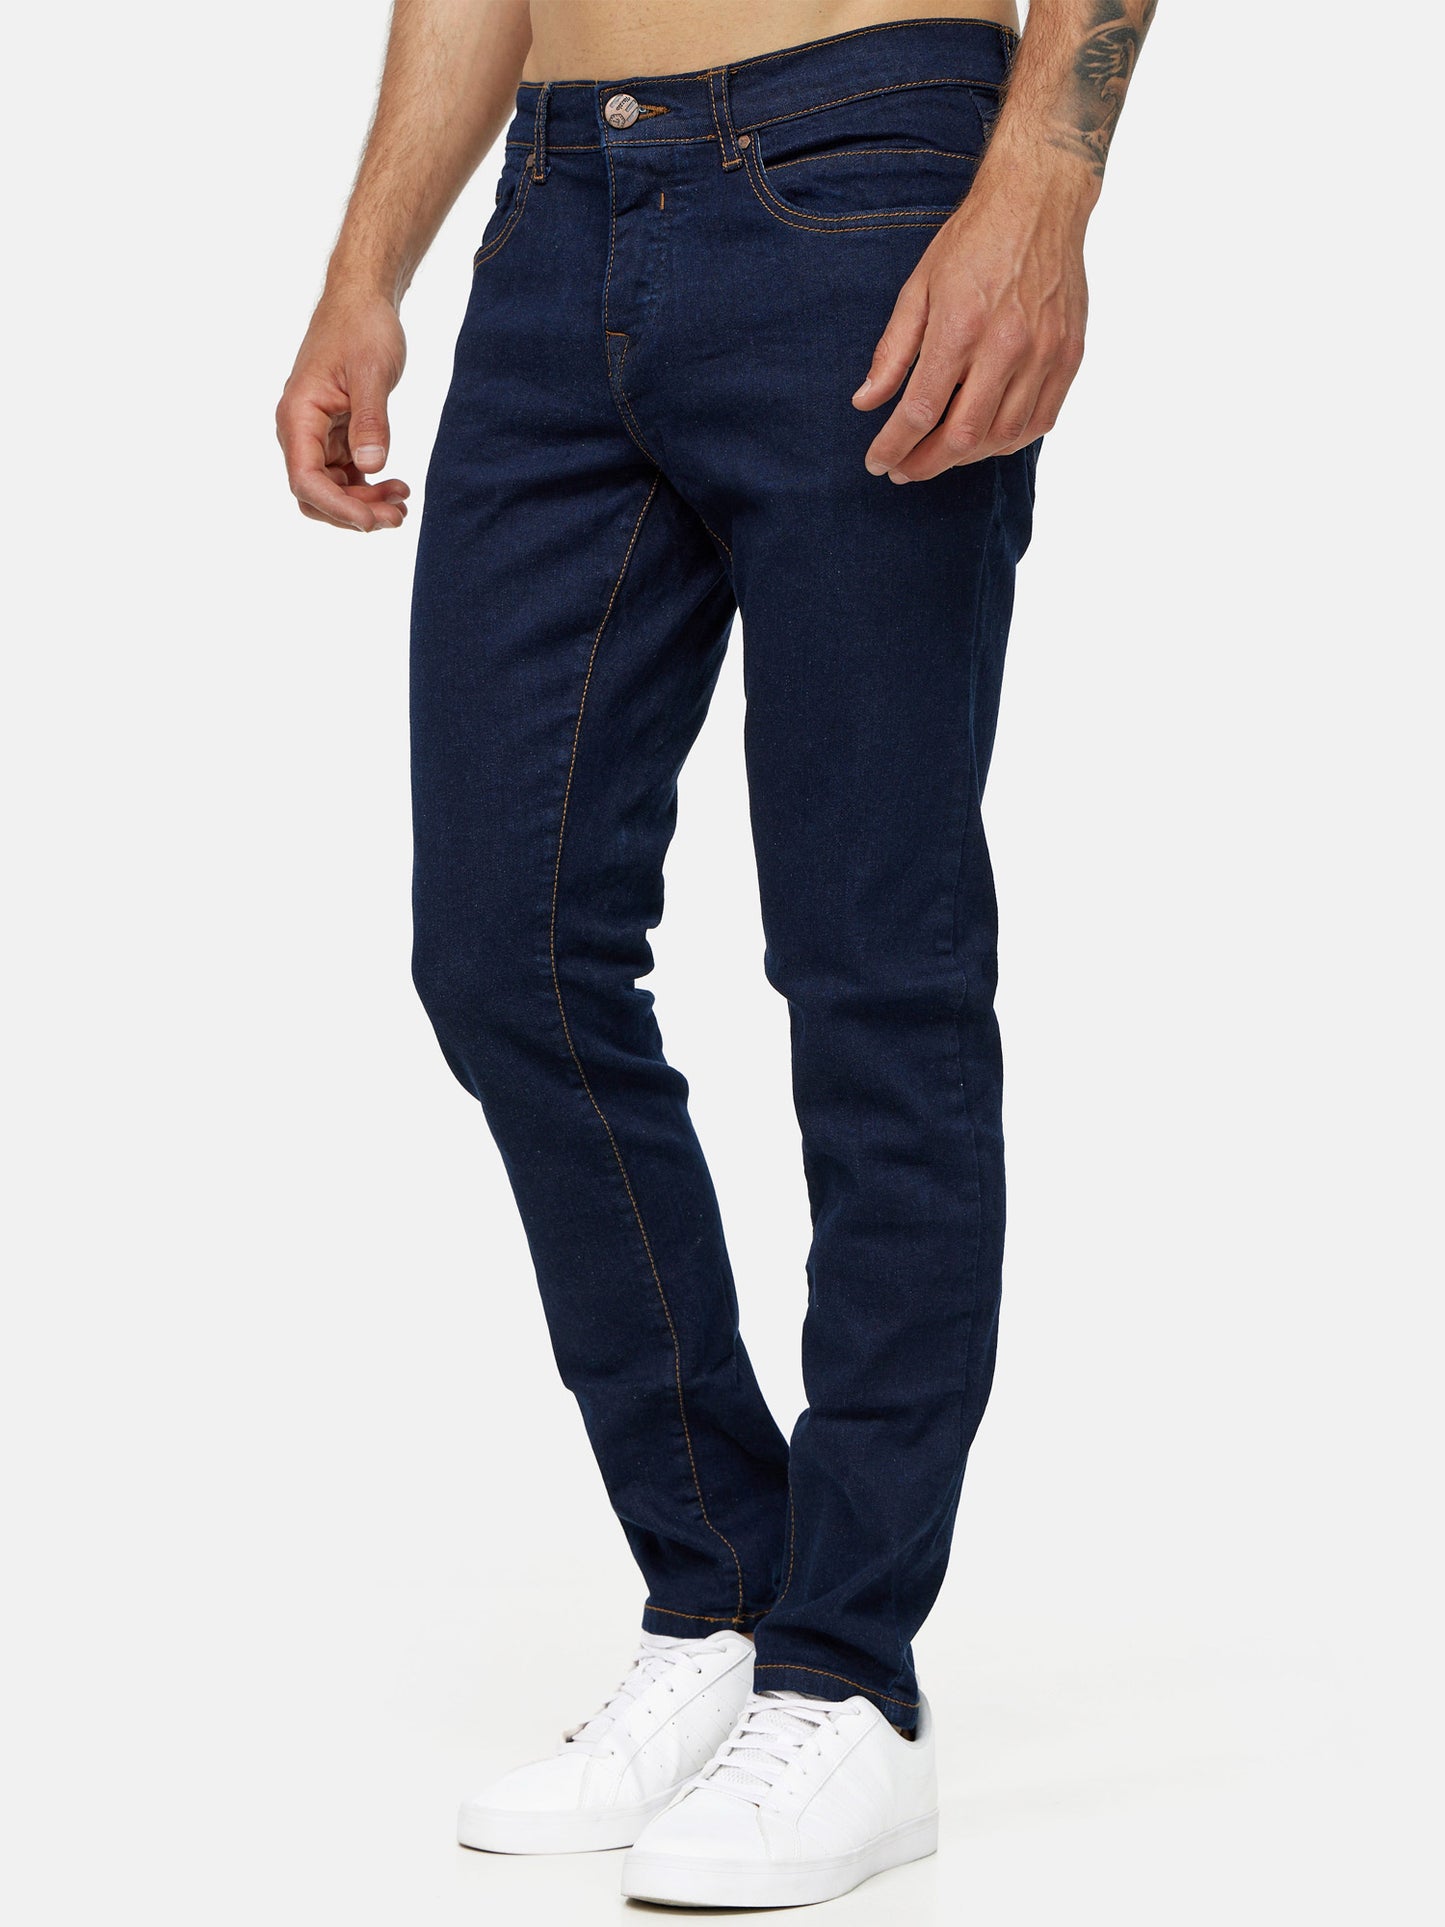 Tazzio Herren Jeans Slim Fit 16531